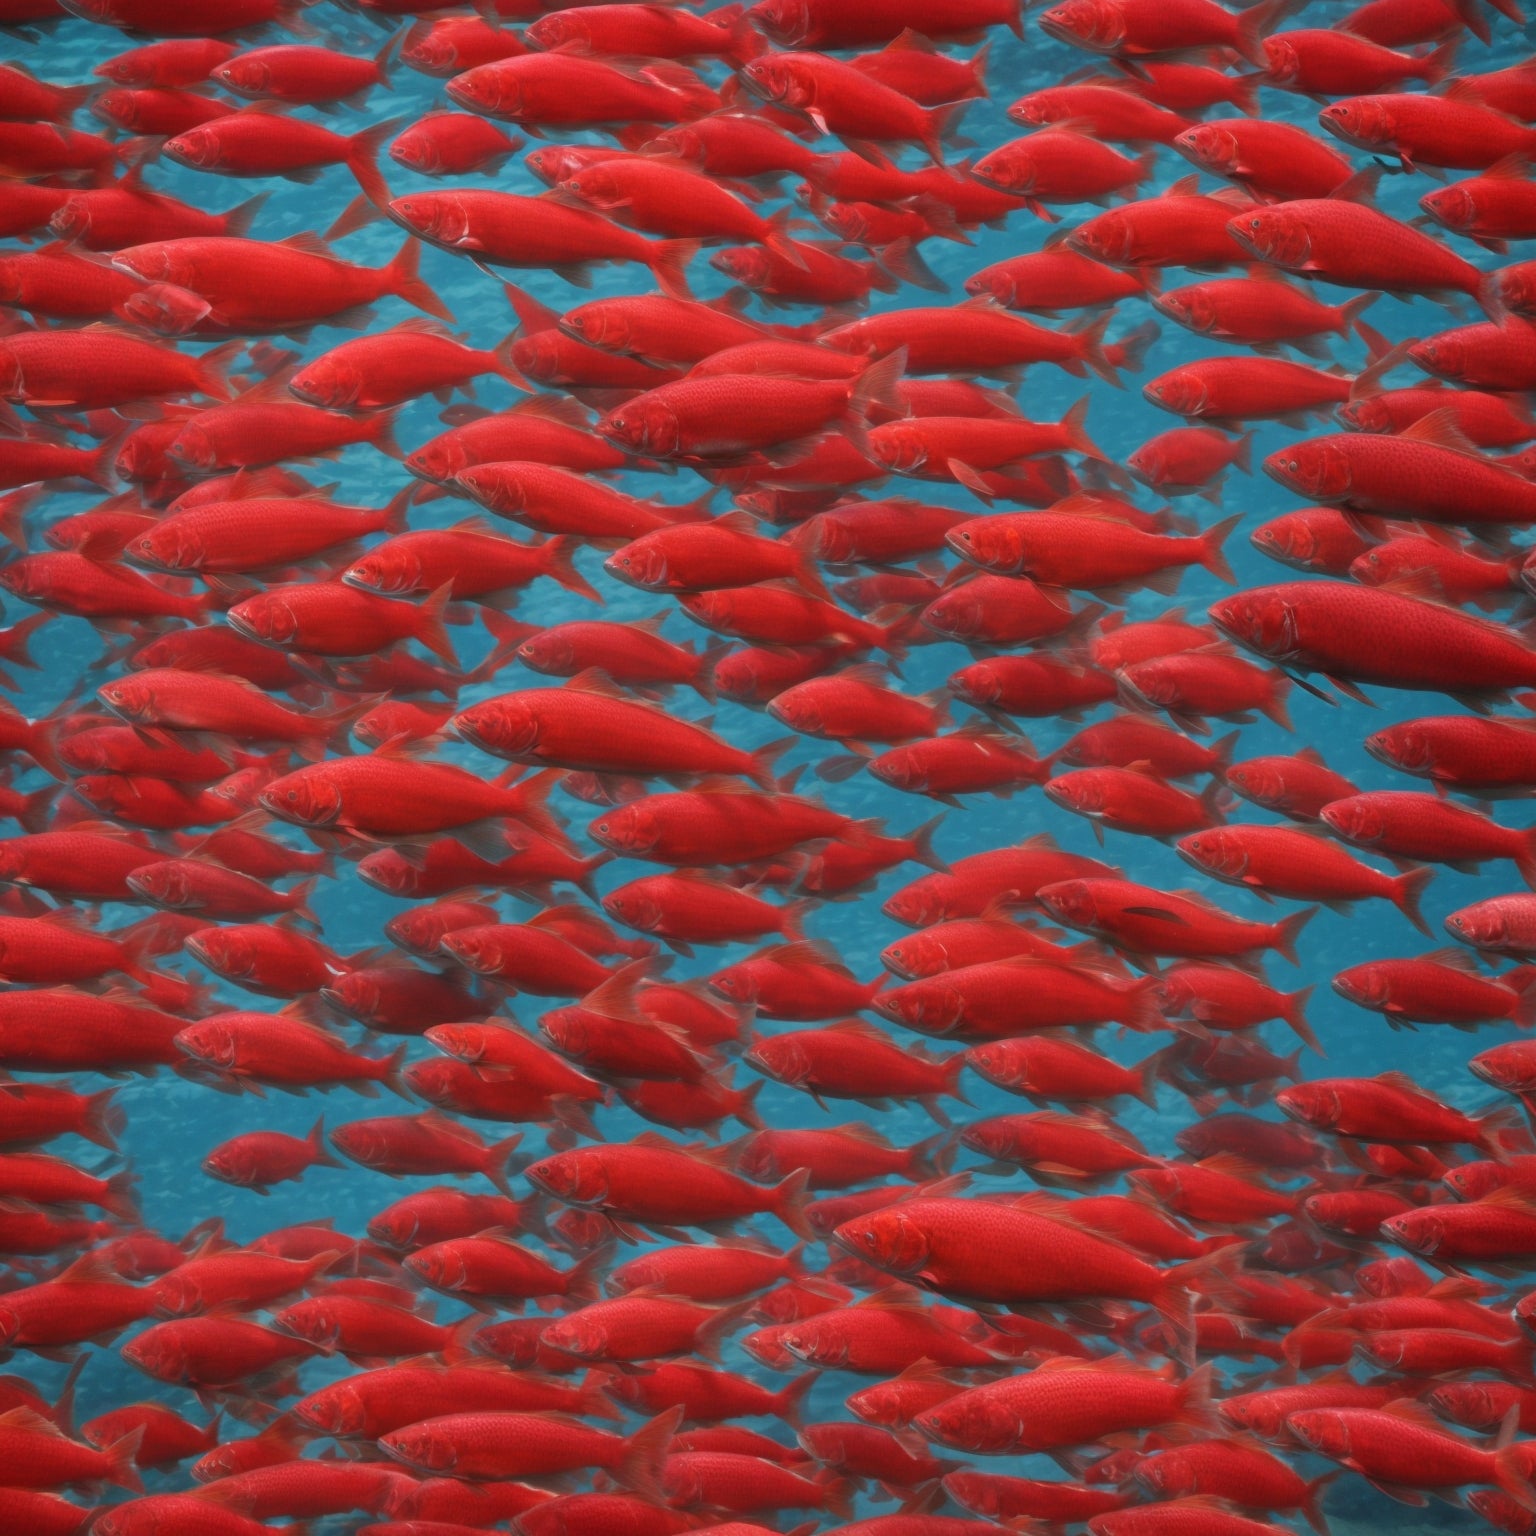 Discover the Fascinating World of Alaskan Sockeye Salmon